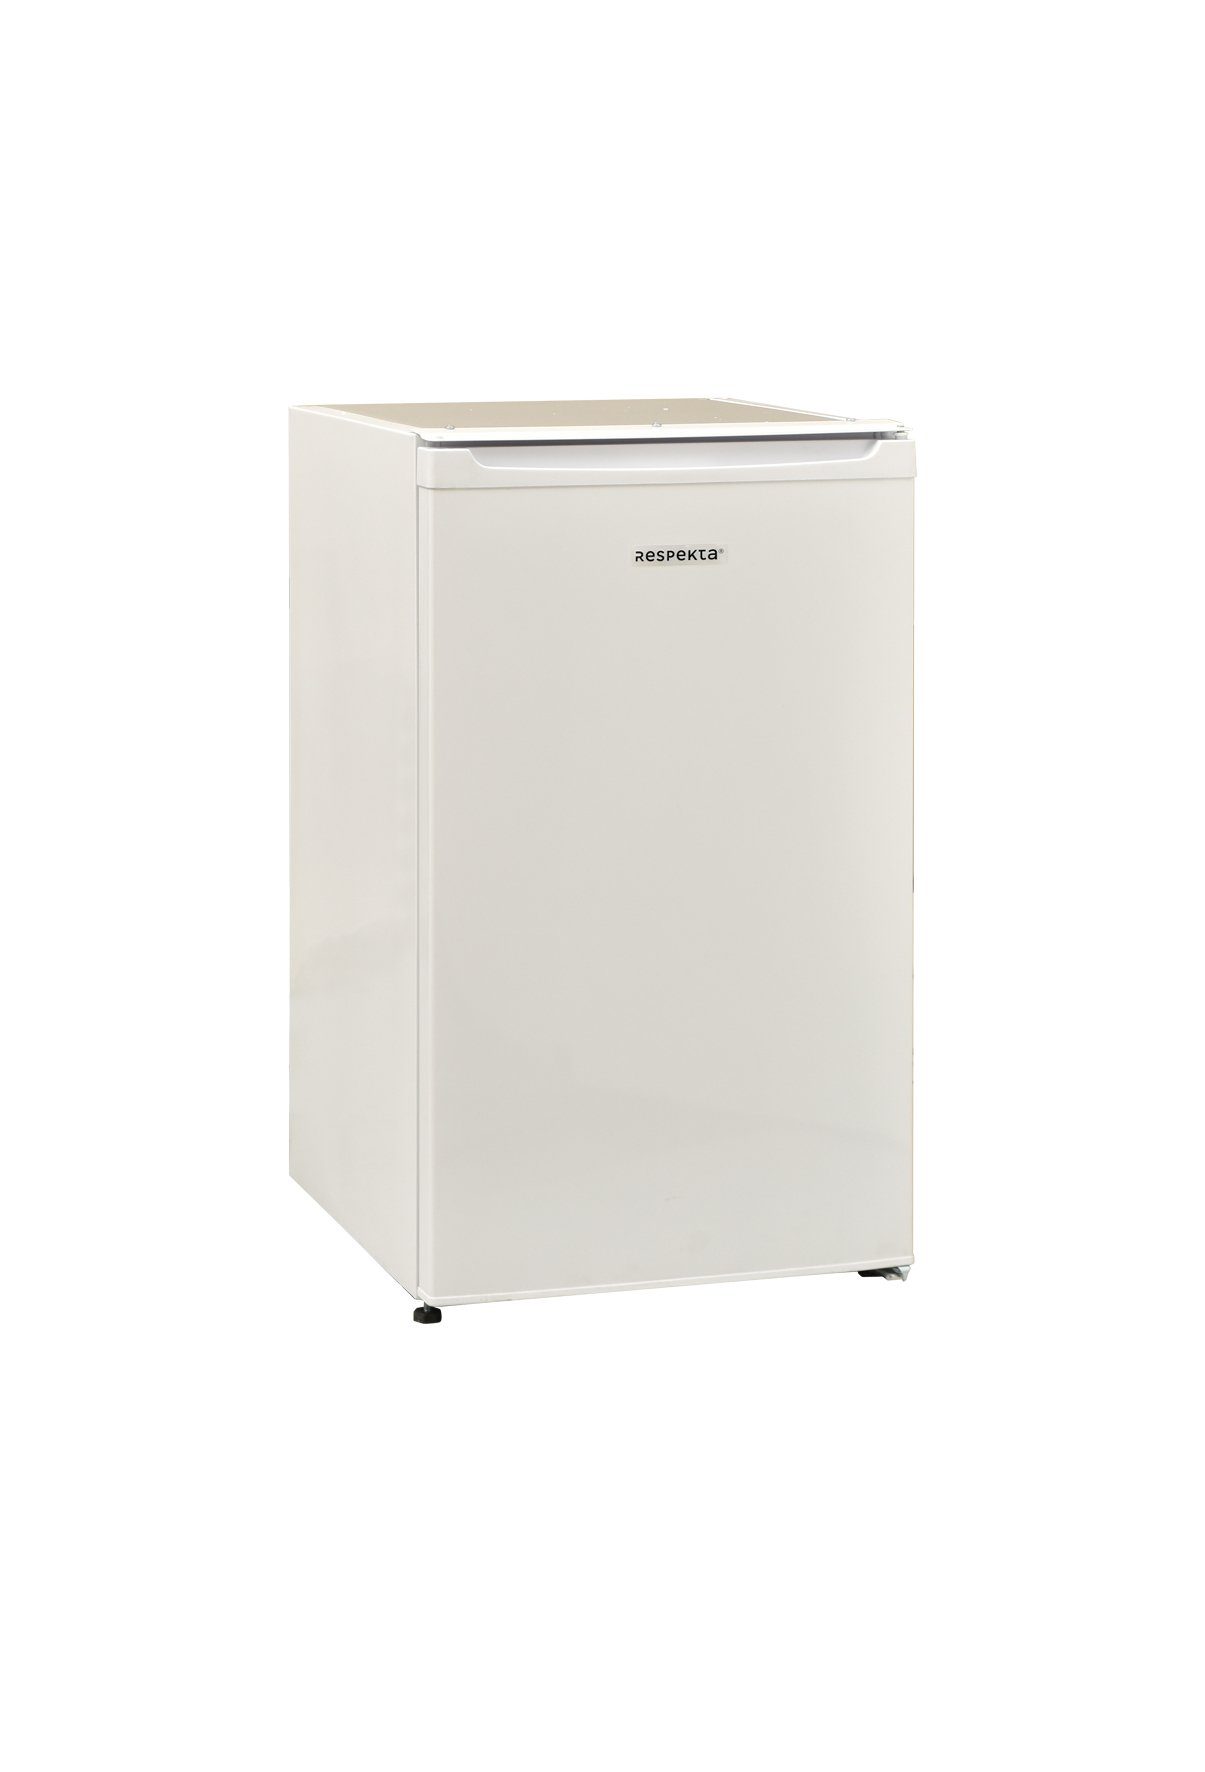 Kühlschrank mit Unterbaufähig RESPEKTA KSU50 Gefrierfach